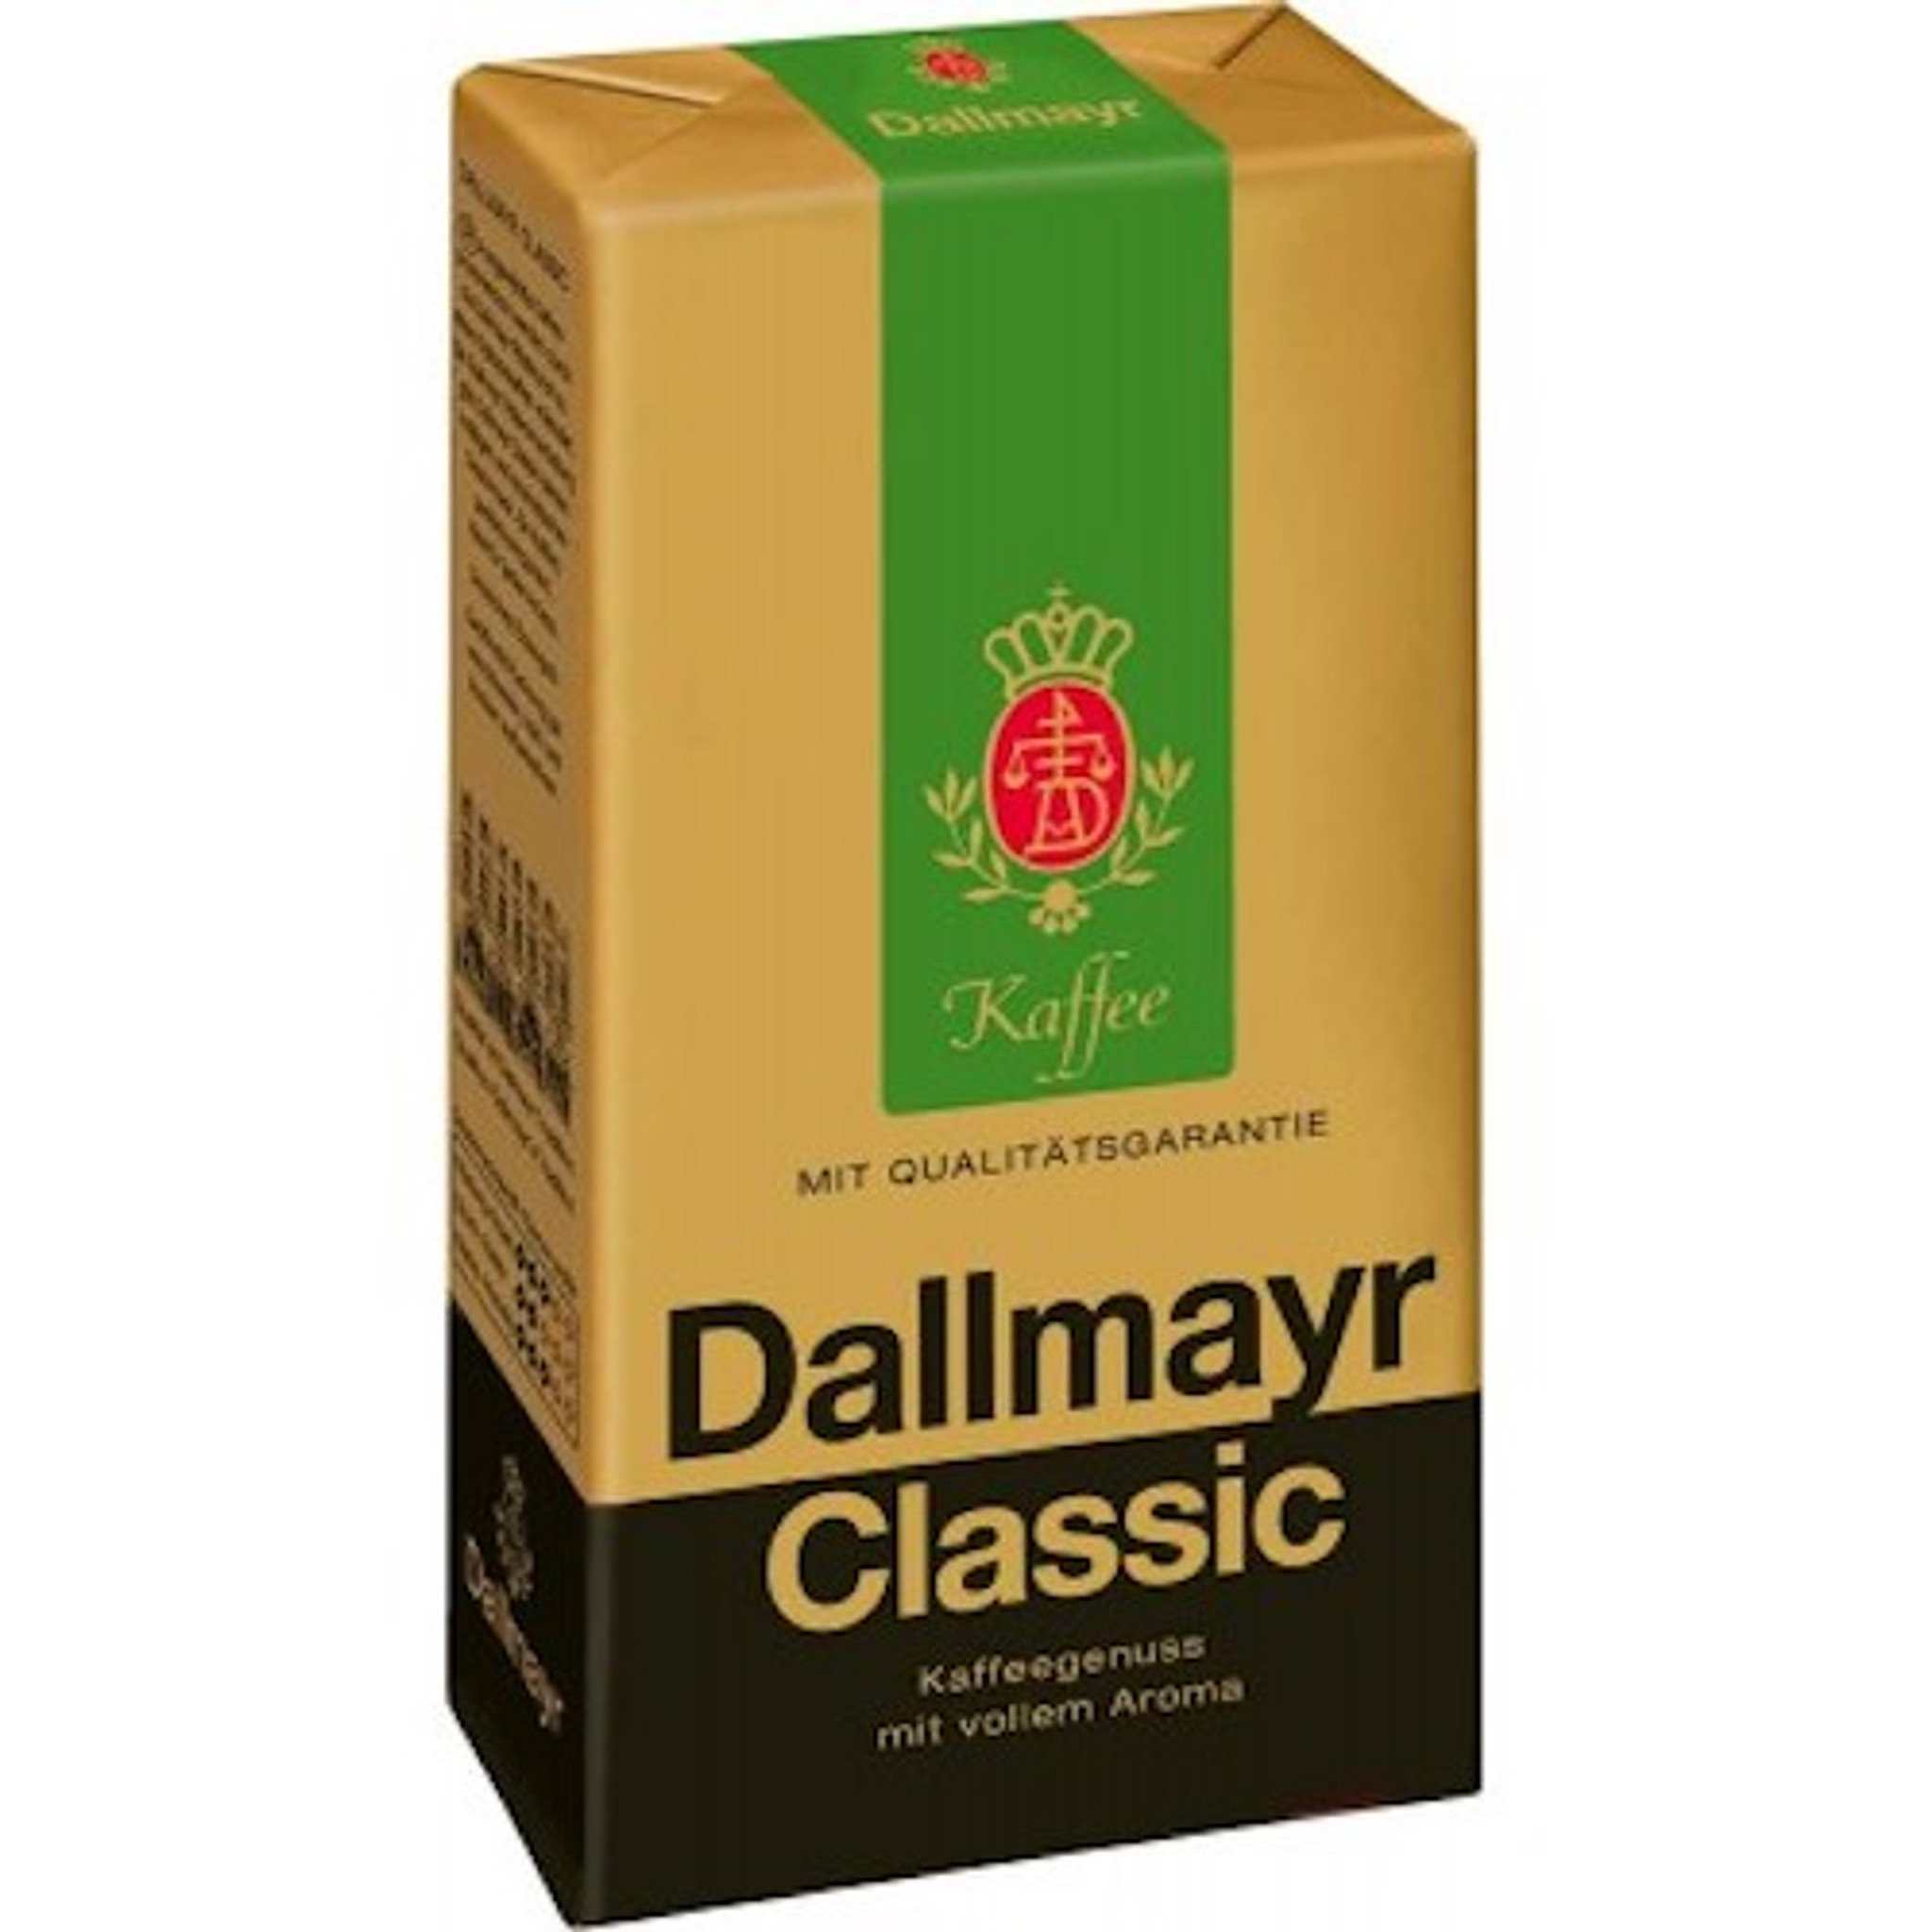 Dallmayr Classic Ground Coffee Taste Germany The of oz. - - 8.8